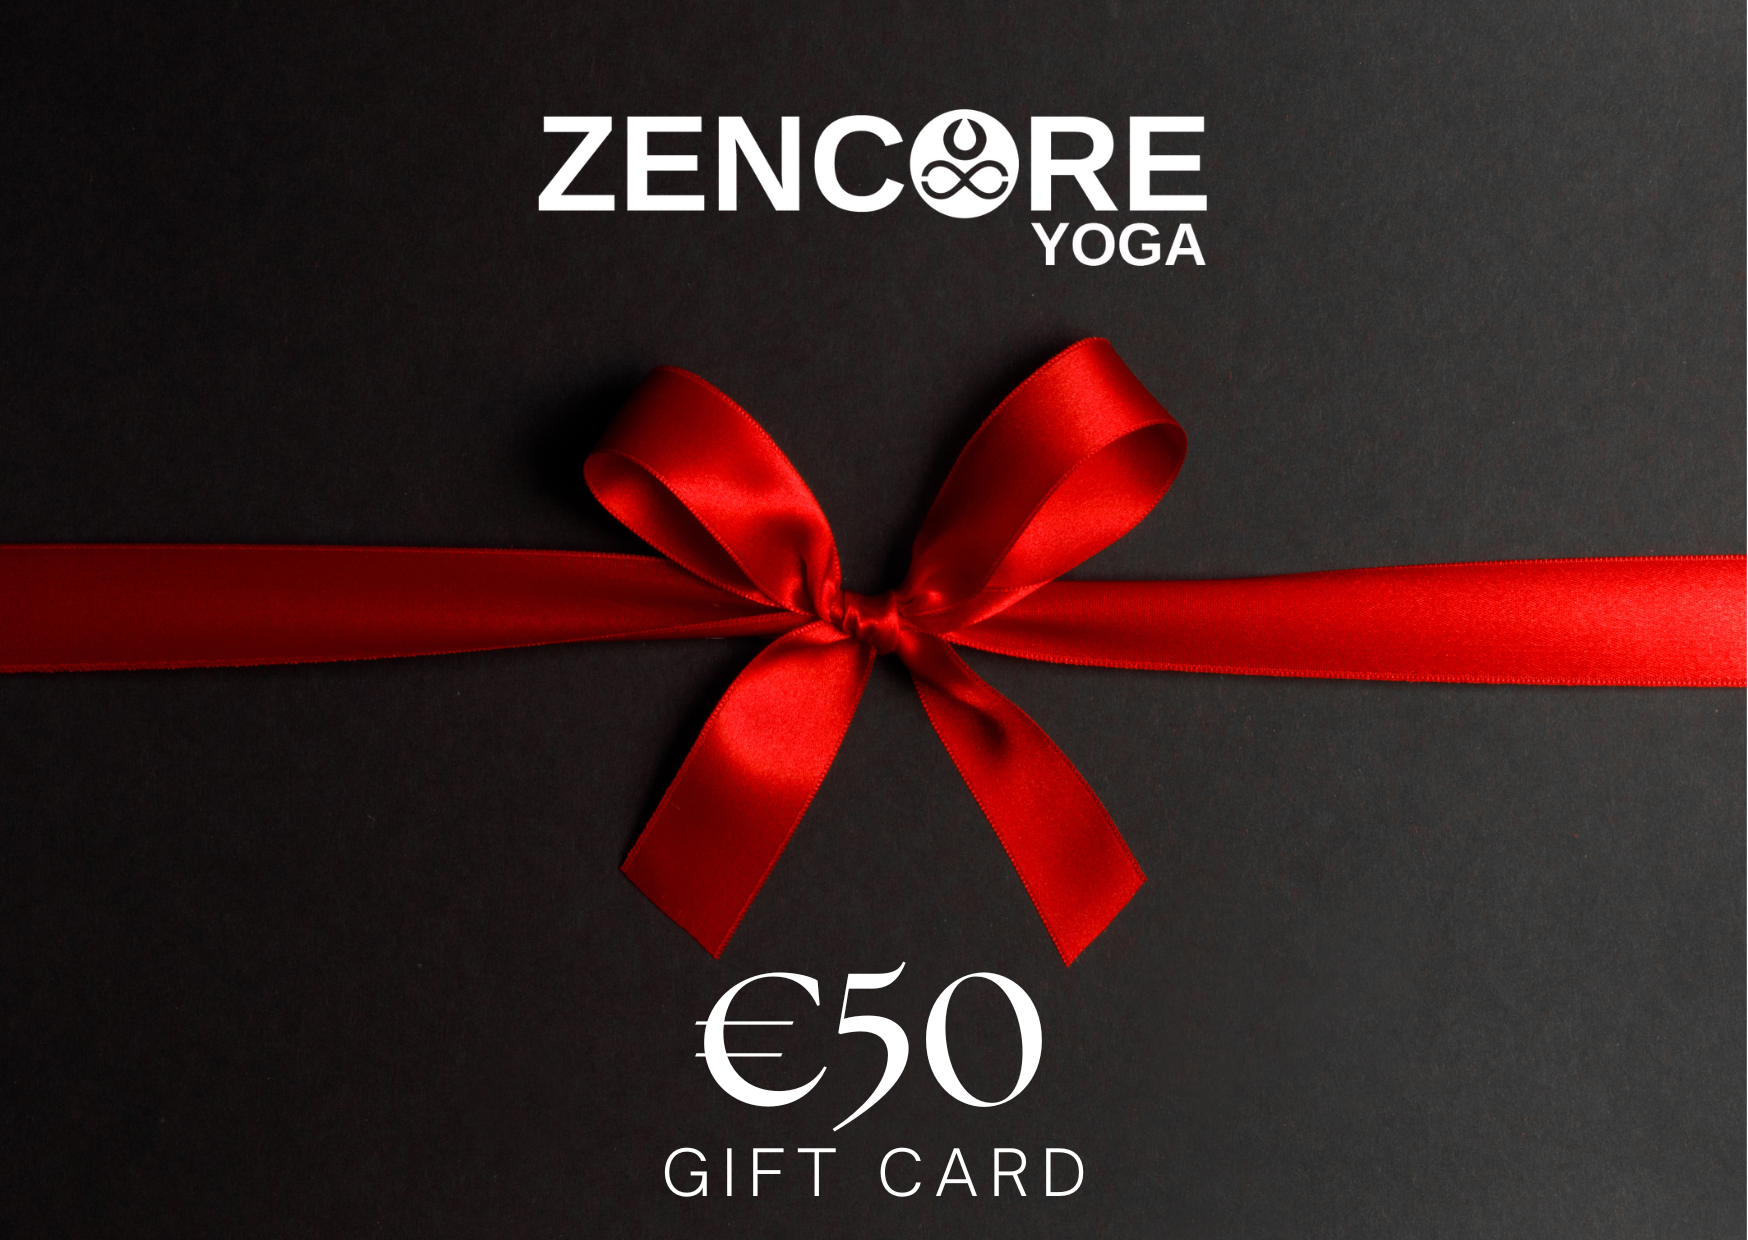 Zencore Yoga - €50 Gift Card